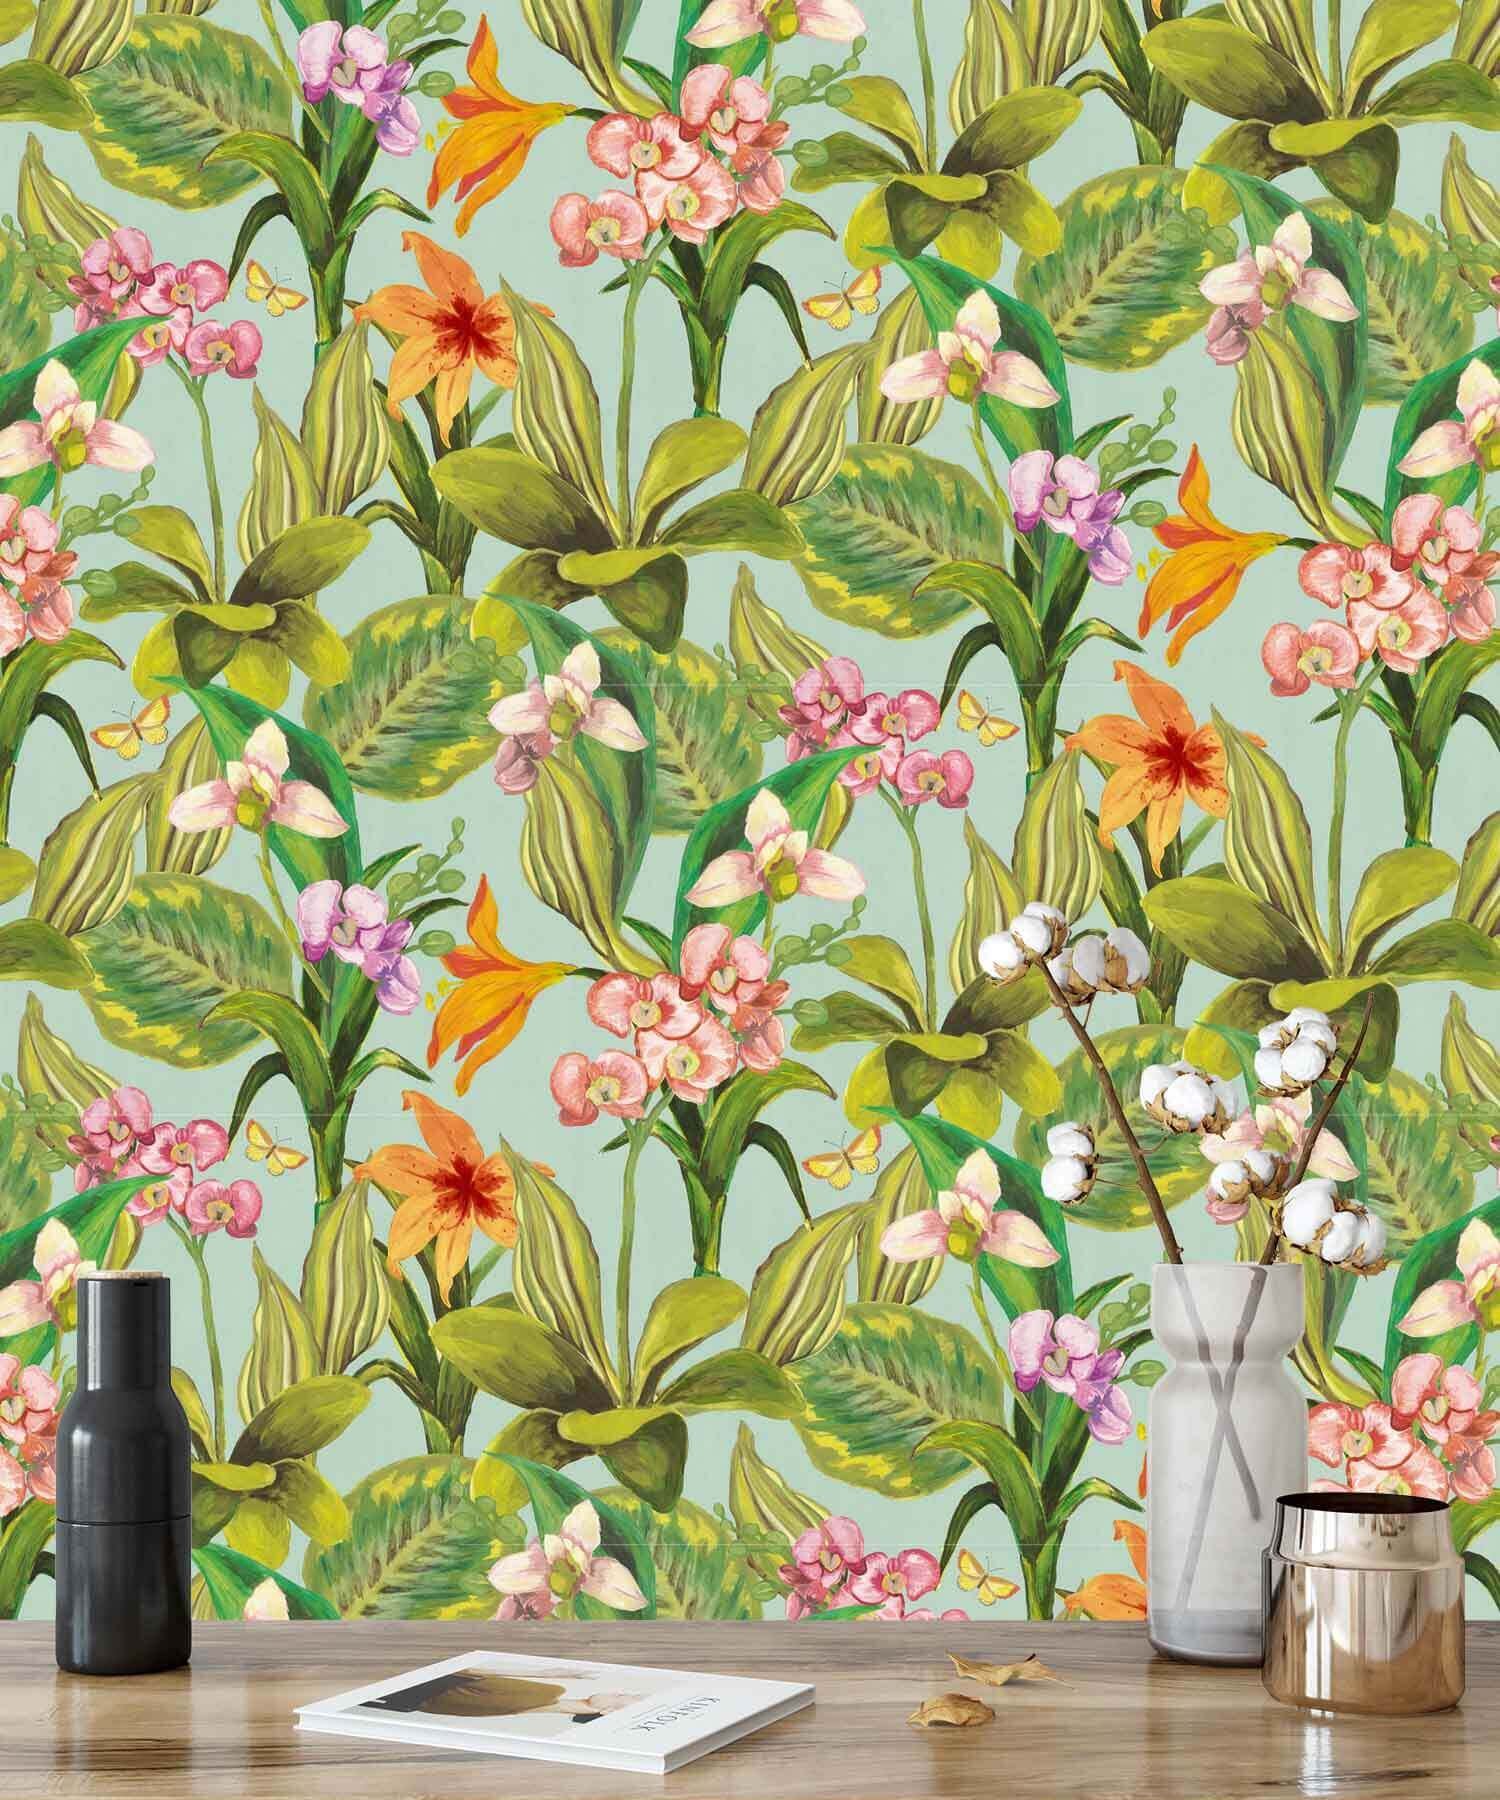 Tropical wallpaper wallpro